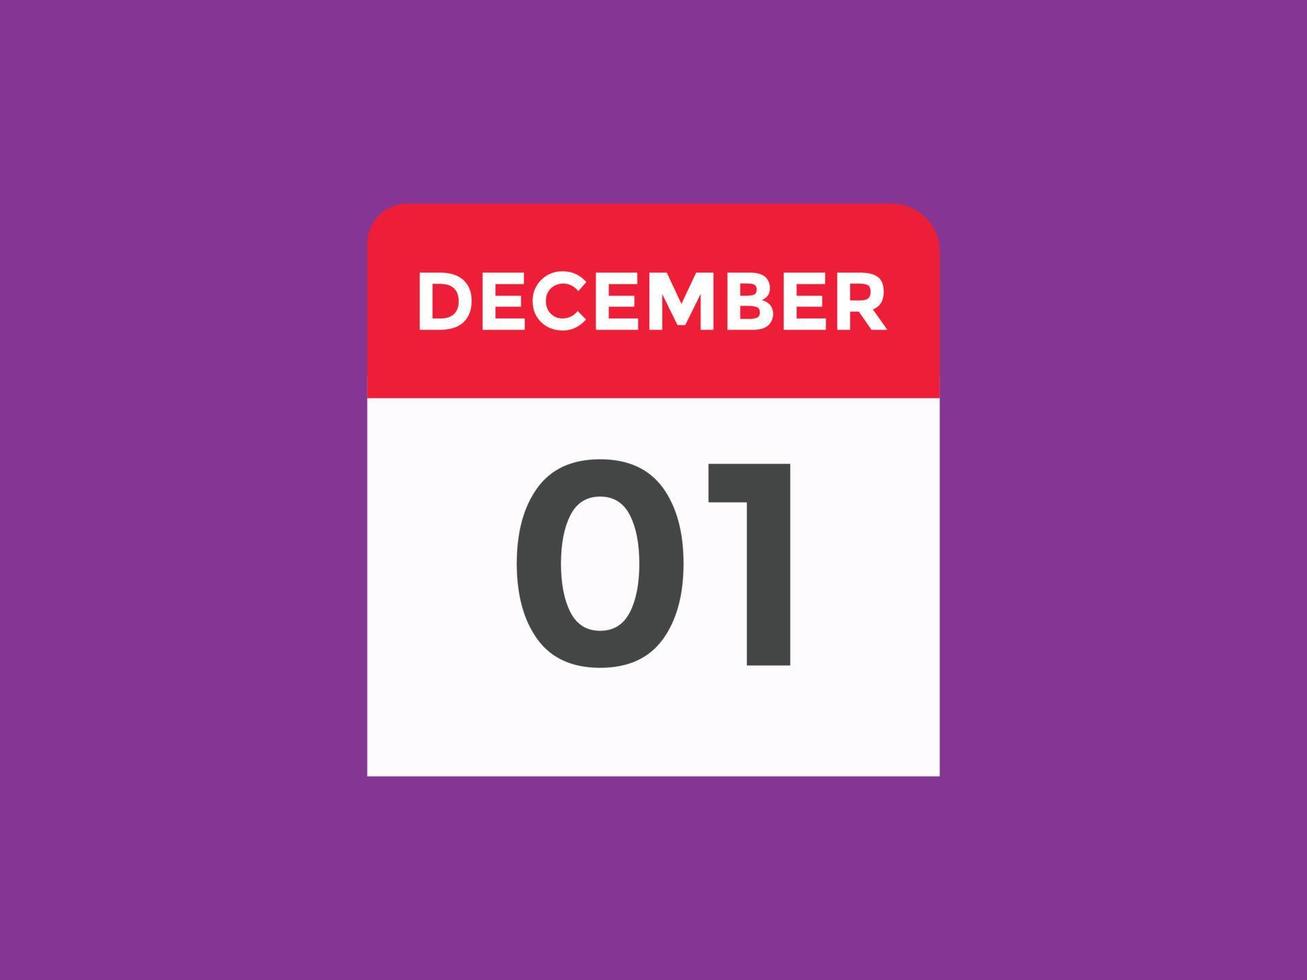 december 1 calendar reminder. 1st december daily calendar icon template. Calendar 1st december icon Design template. Vector illustration